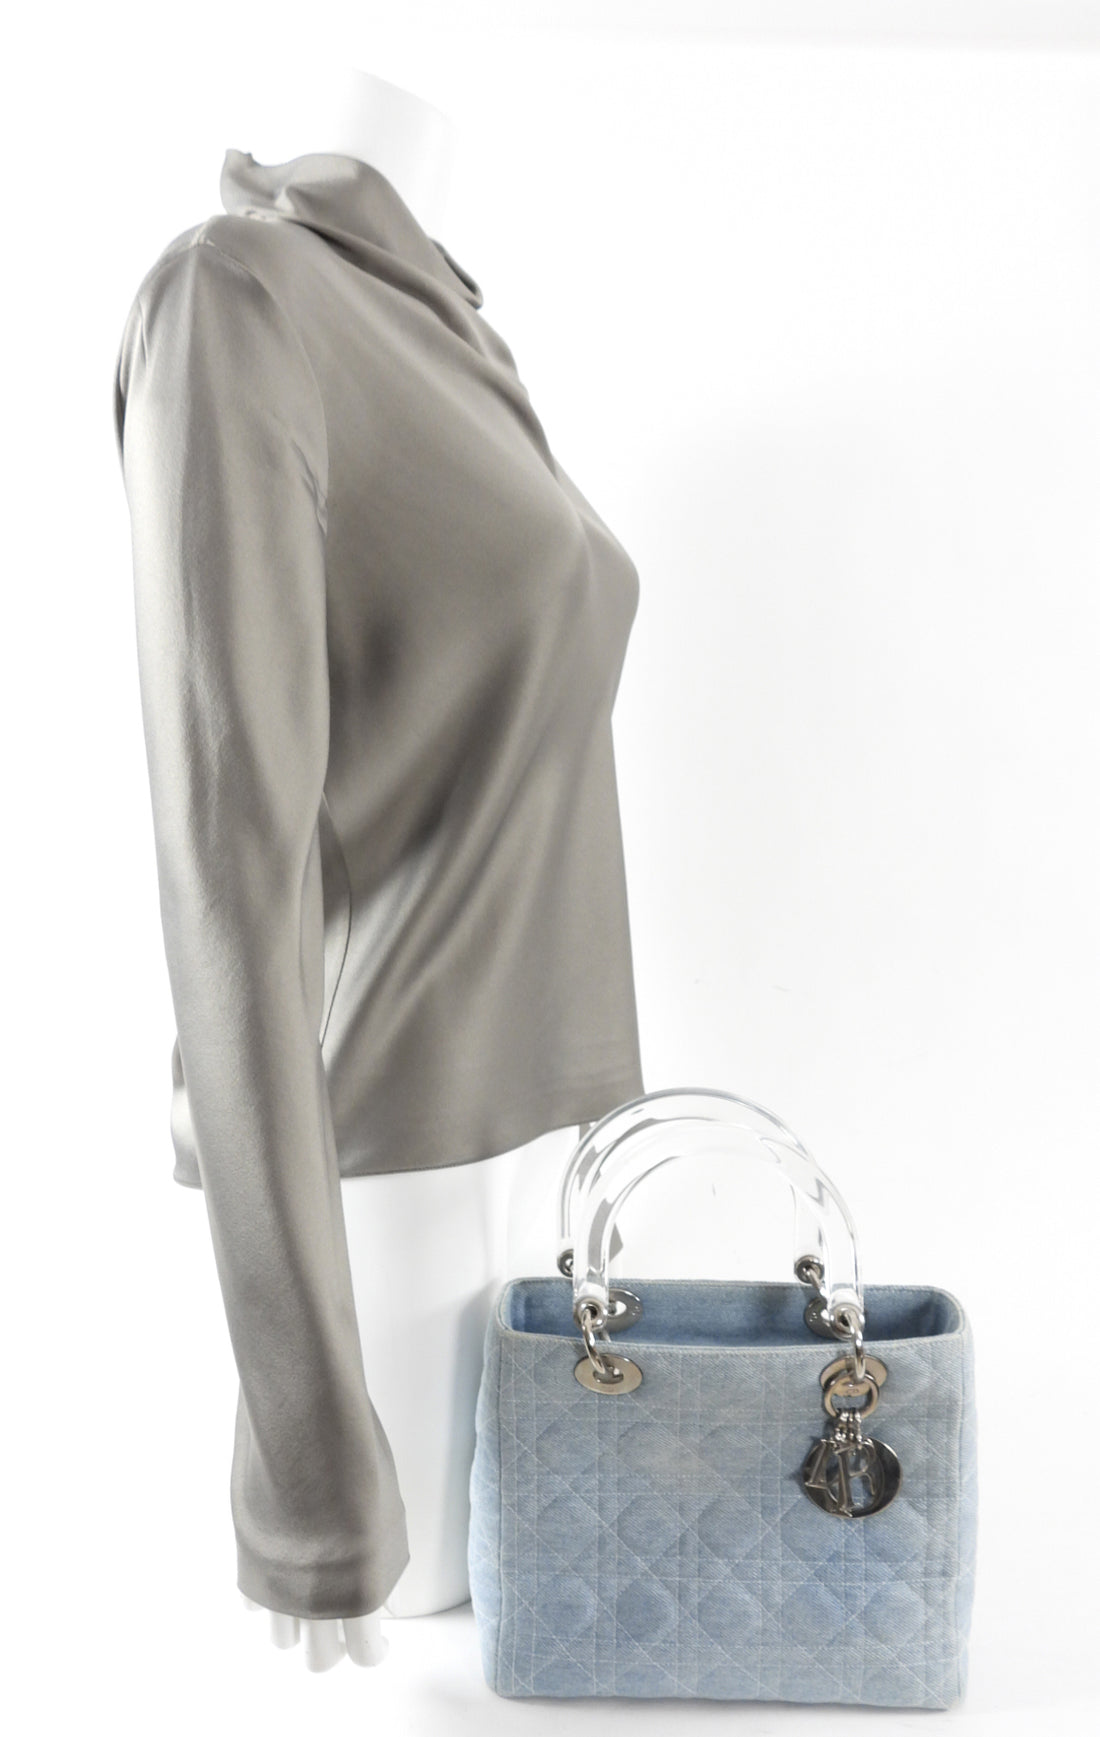 Dior Lady Dior bag light blue  Lady dior Lady dior bag outfit Lady dior  bag